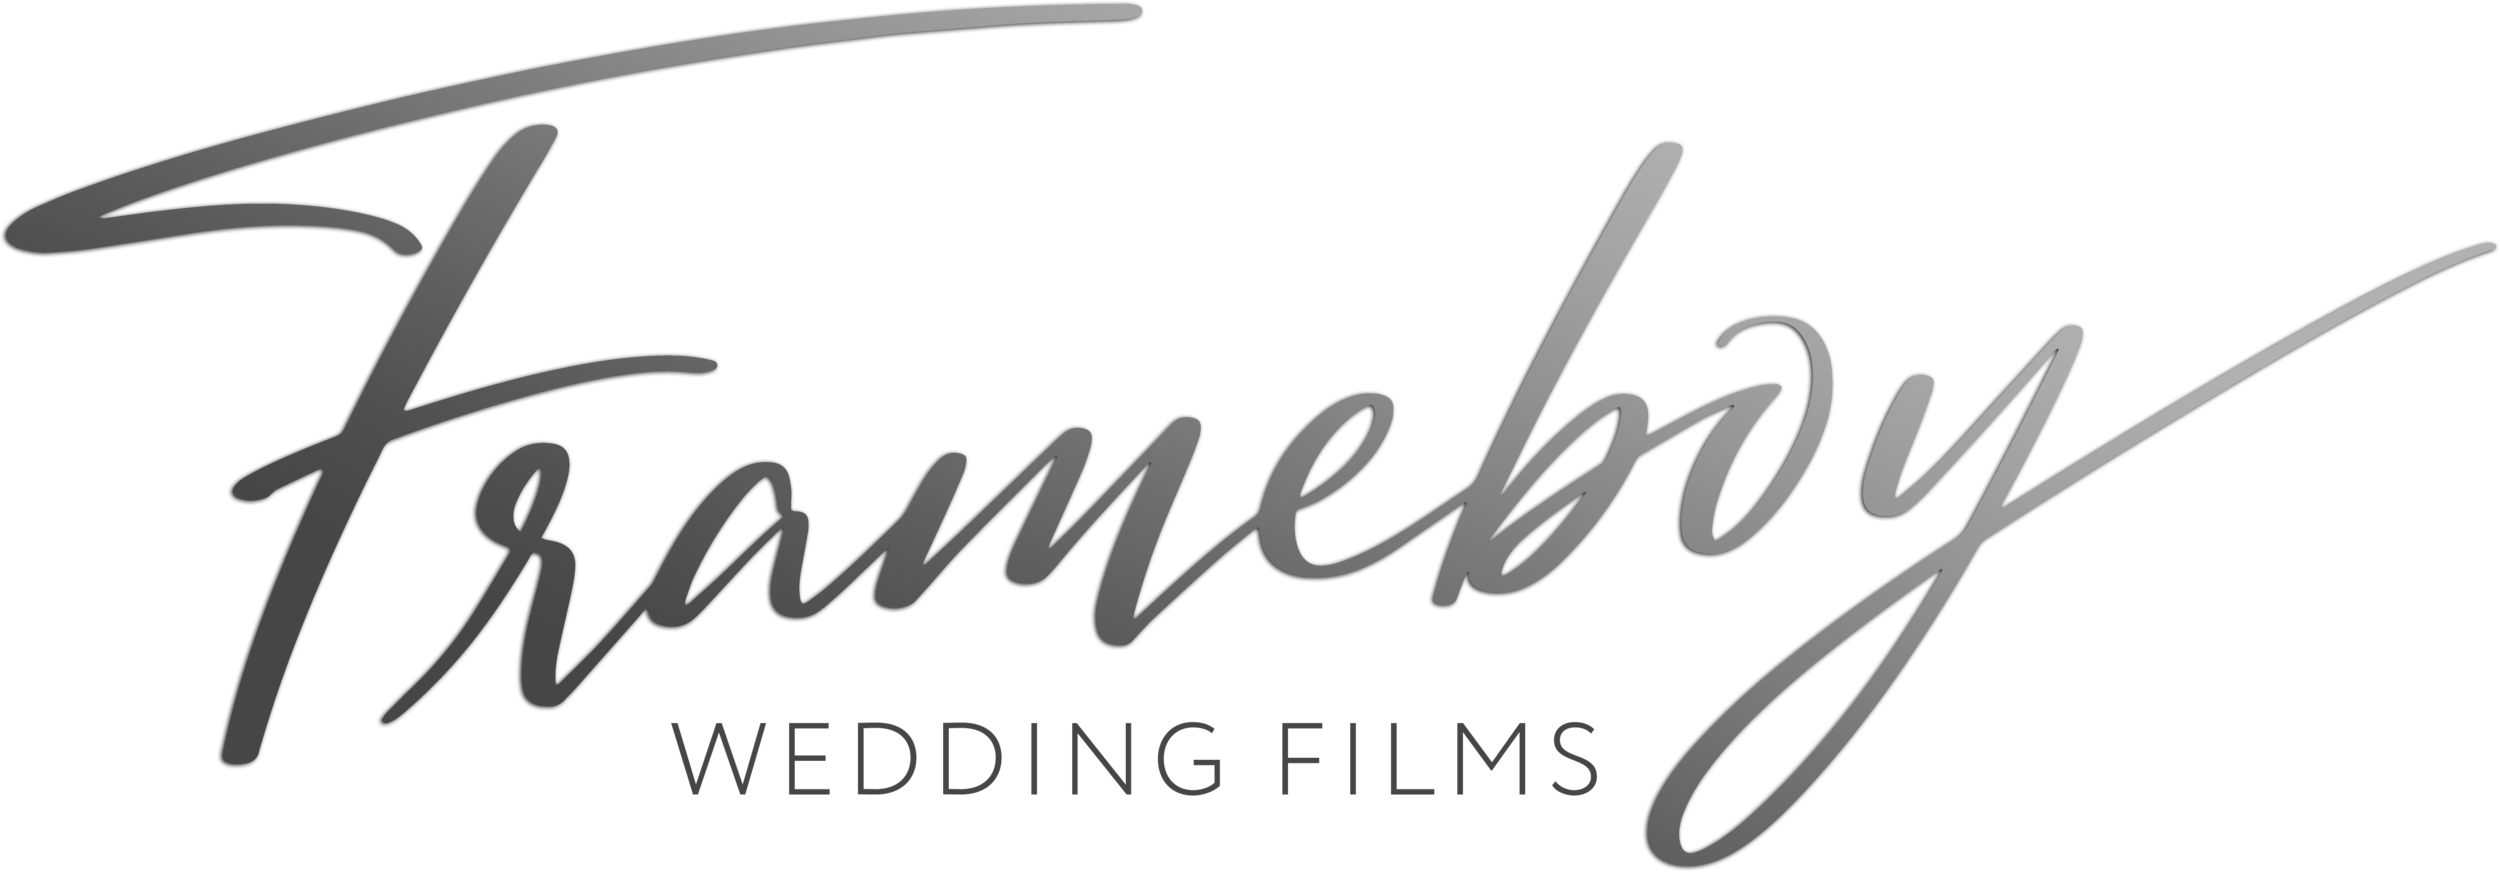 Frameboy Wedding Films